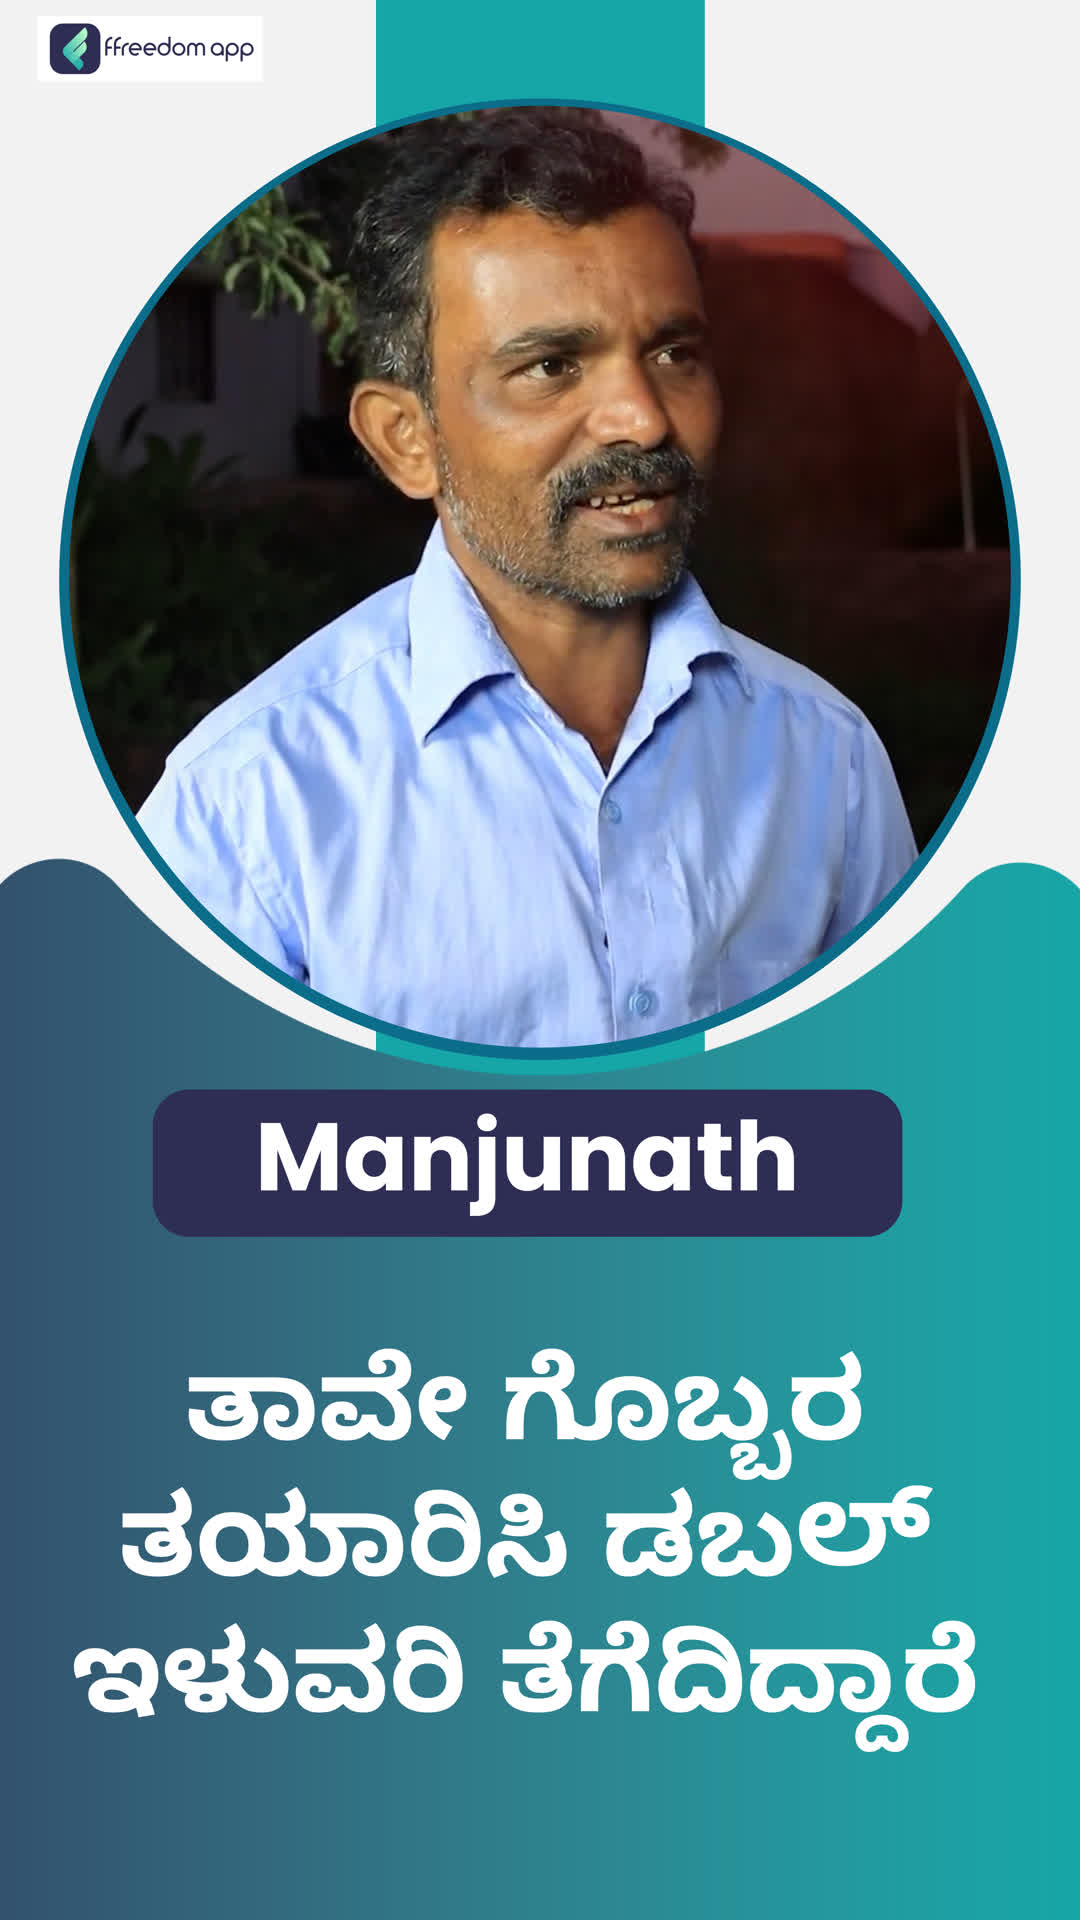 Manjunath 's Honest Review of ffreedom app - Chitradurga ,Karnataka